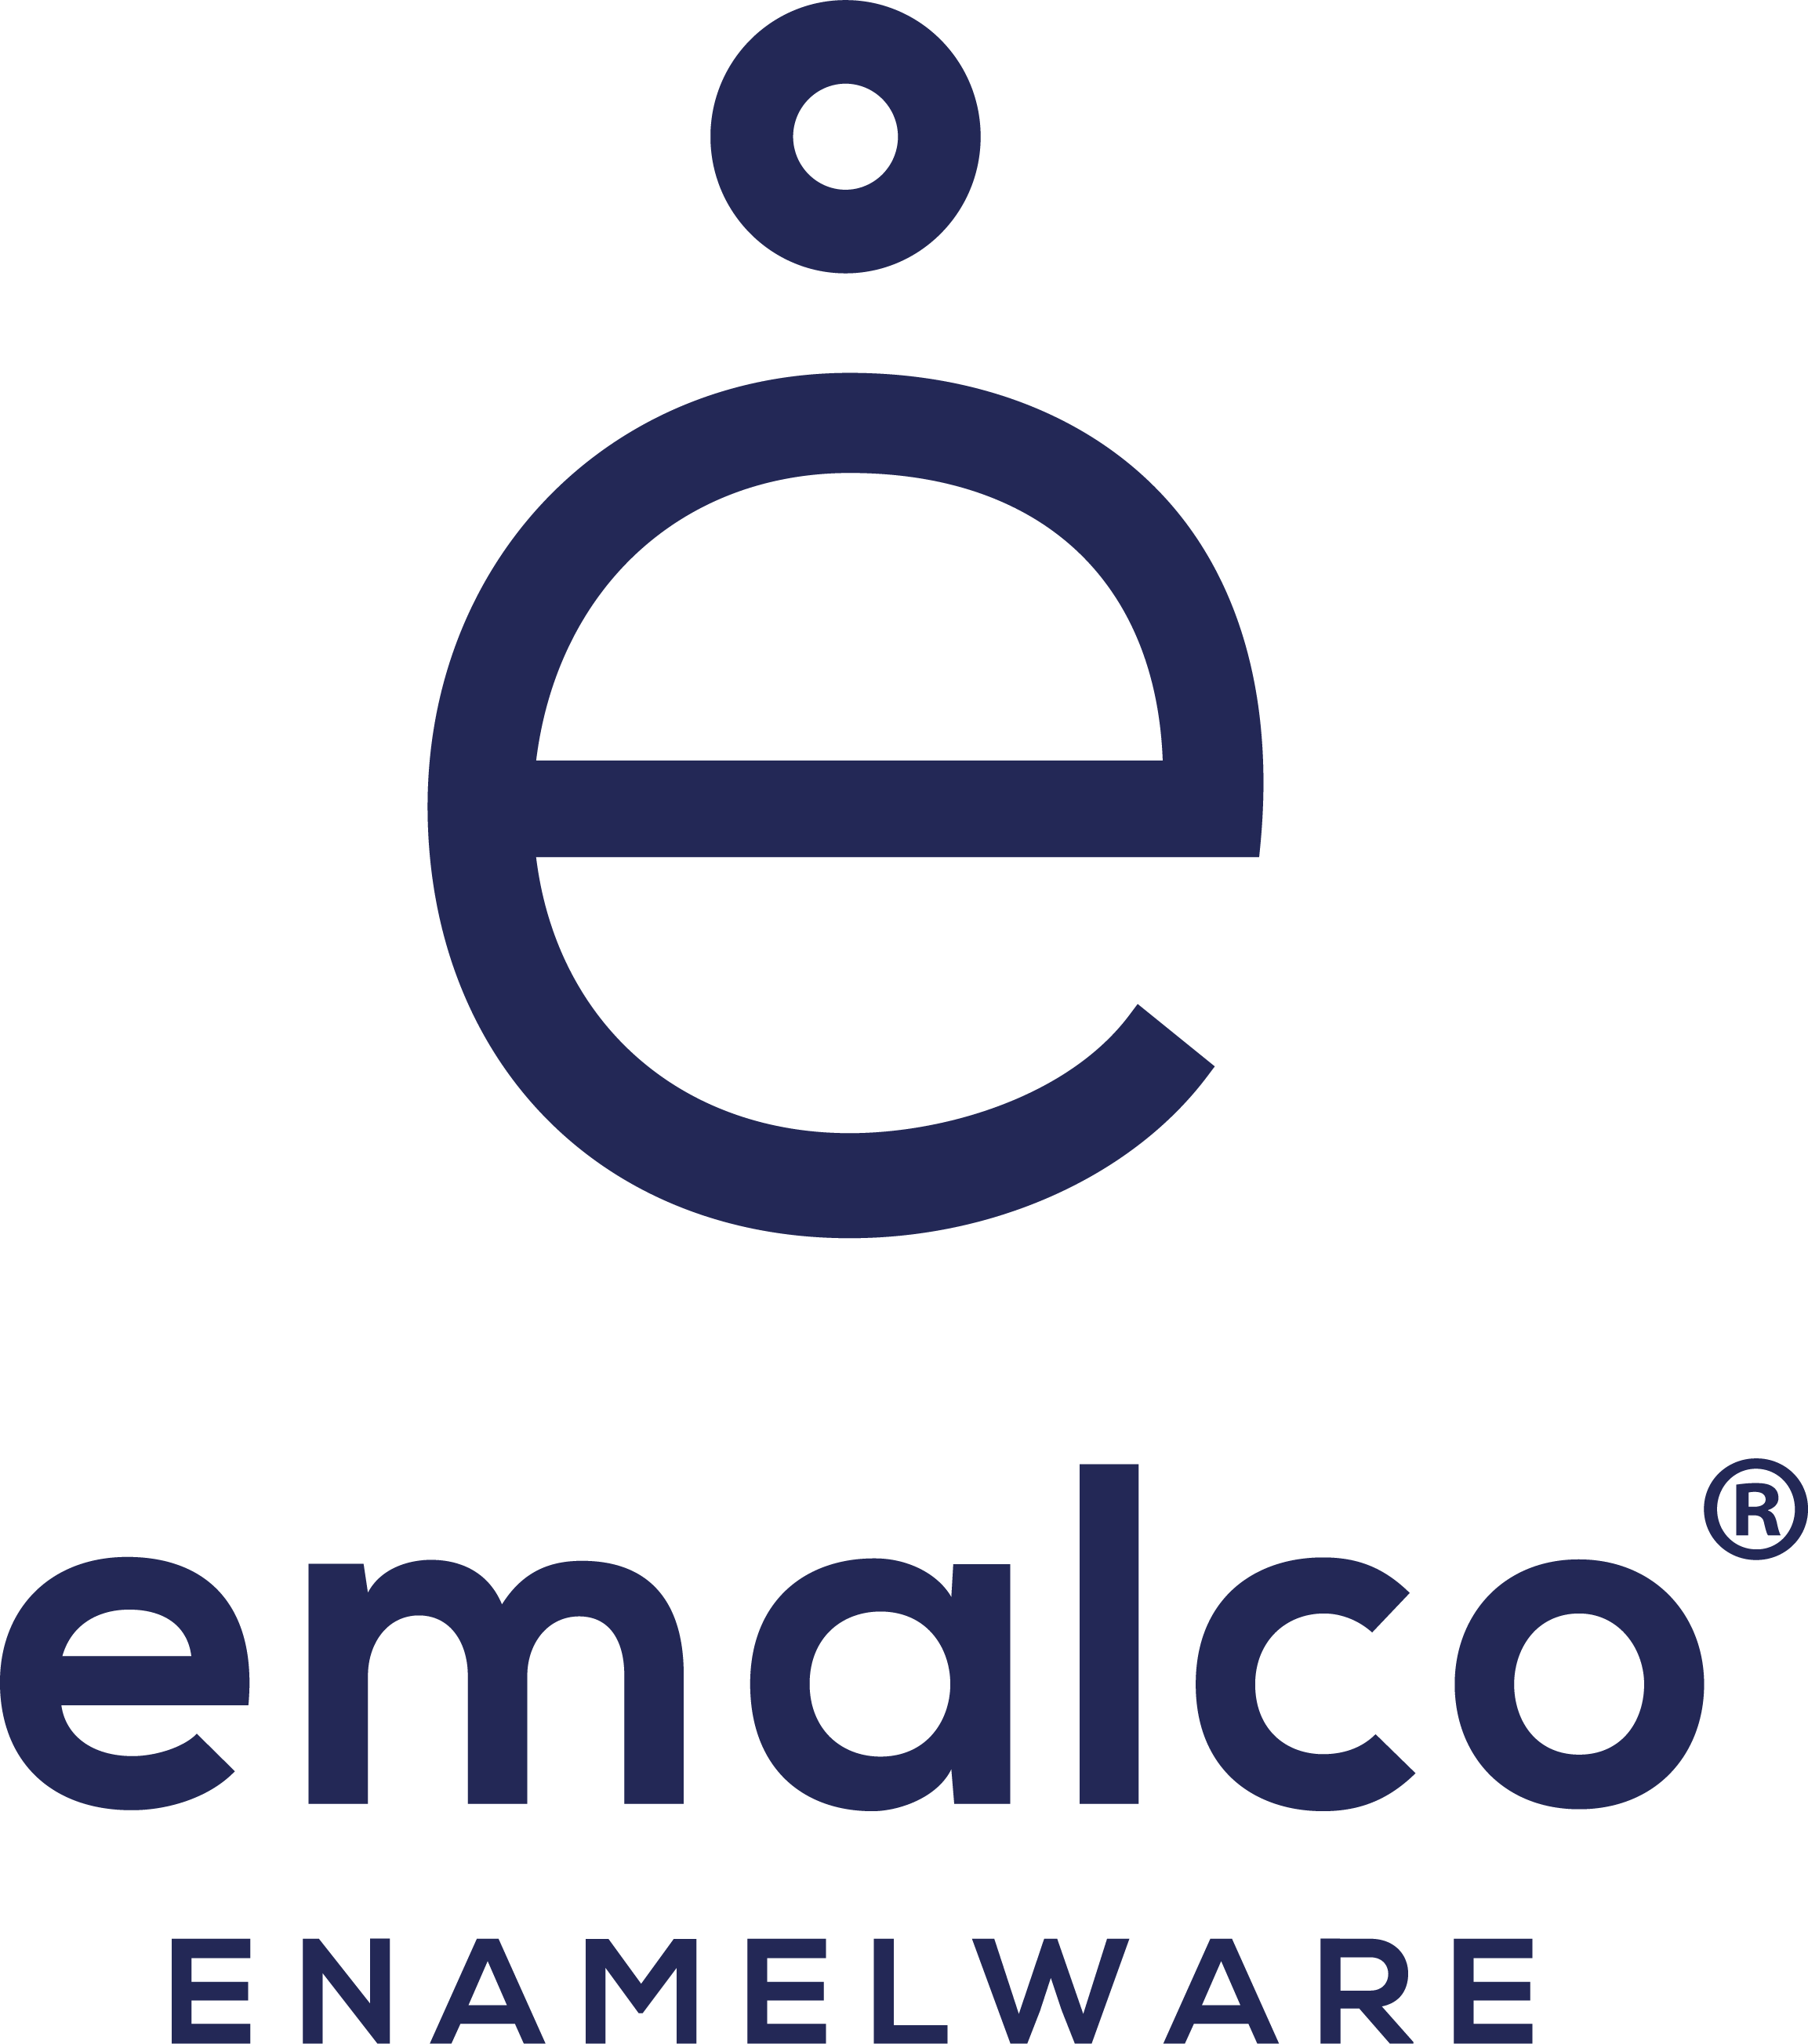 Emalco Enamelware